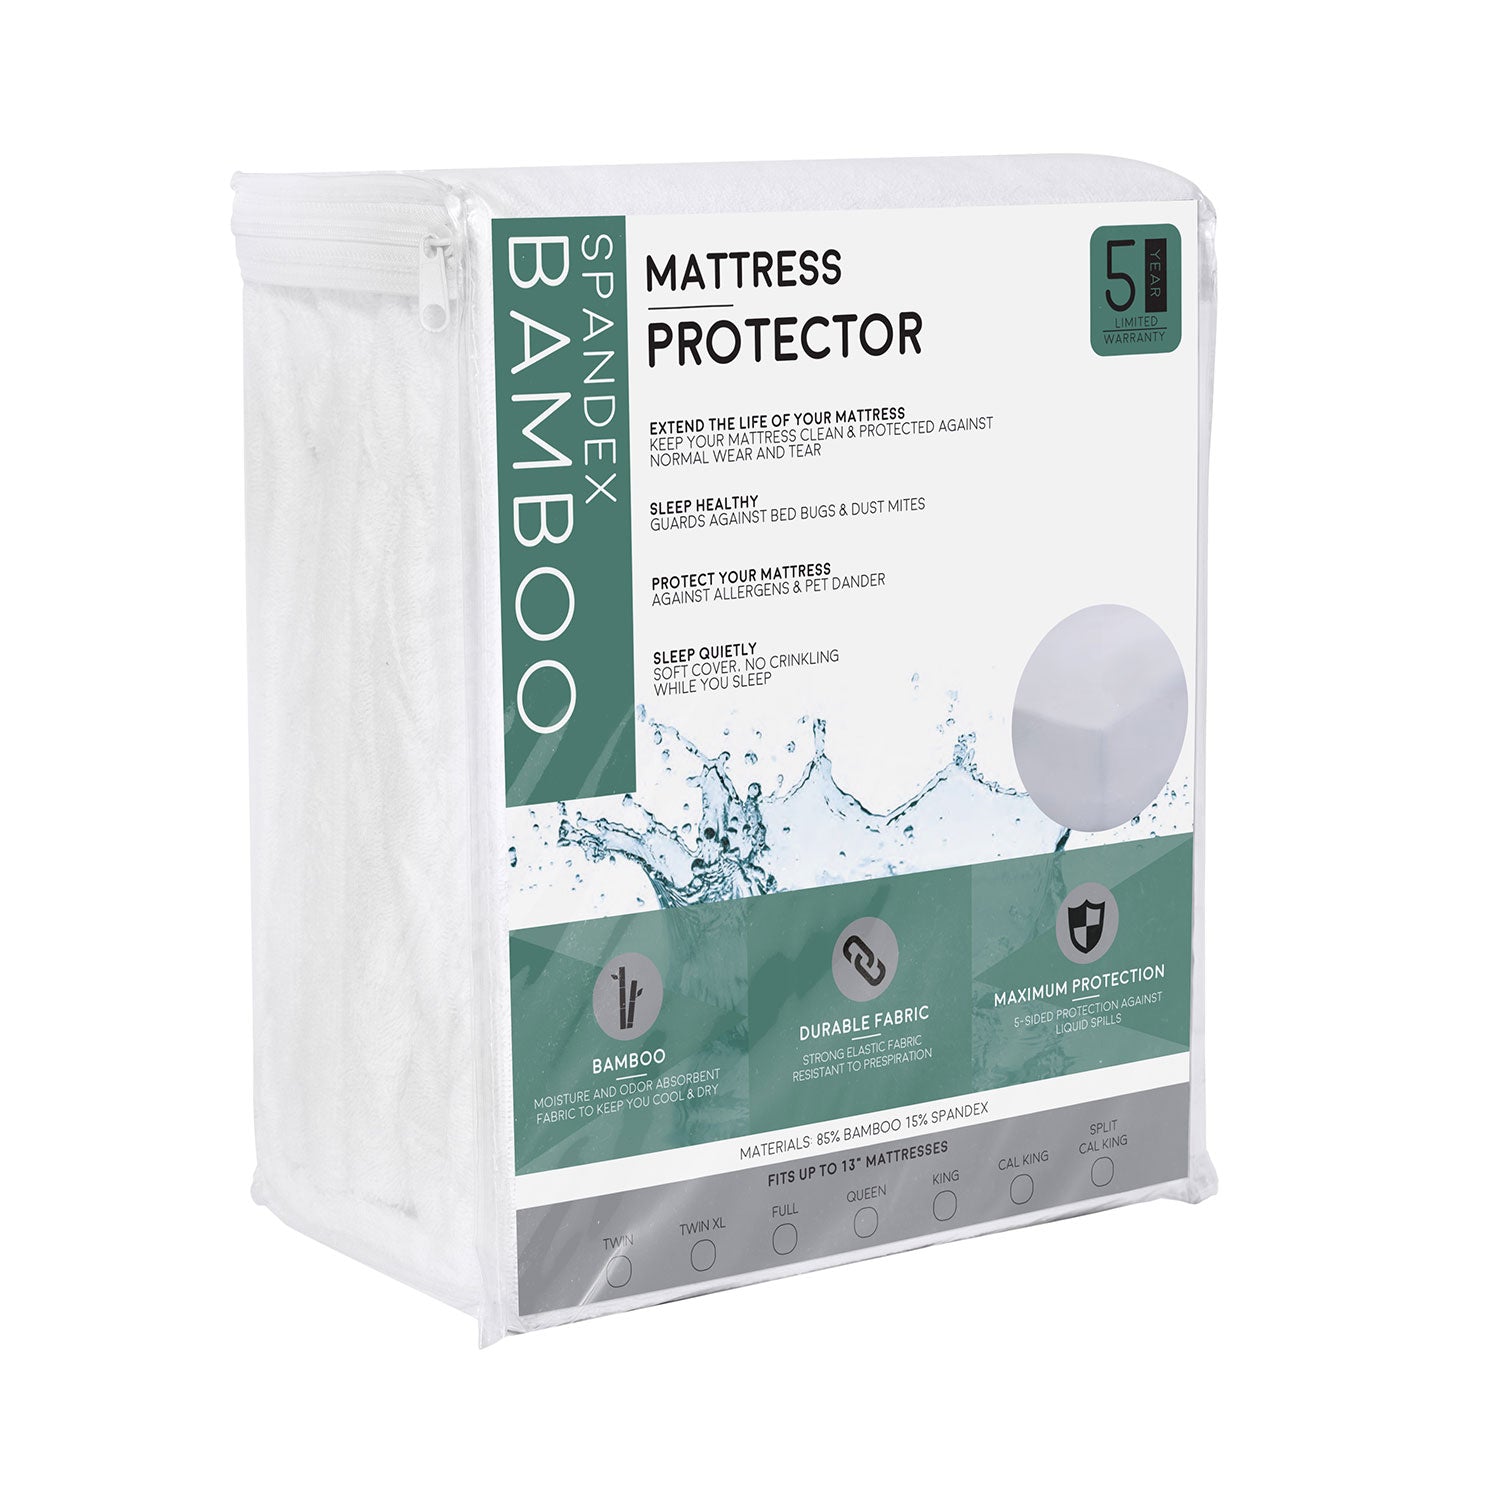 Premium Bamboo Mattress Protector - 100% Waterproof and Hypoallergenic - BlissfulNights.com